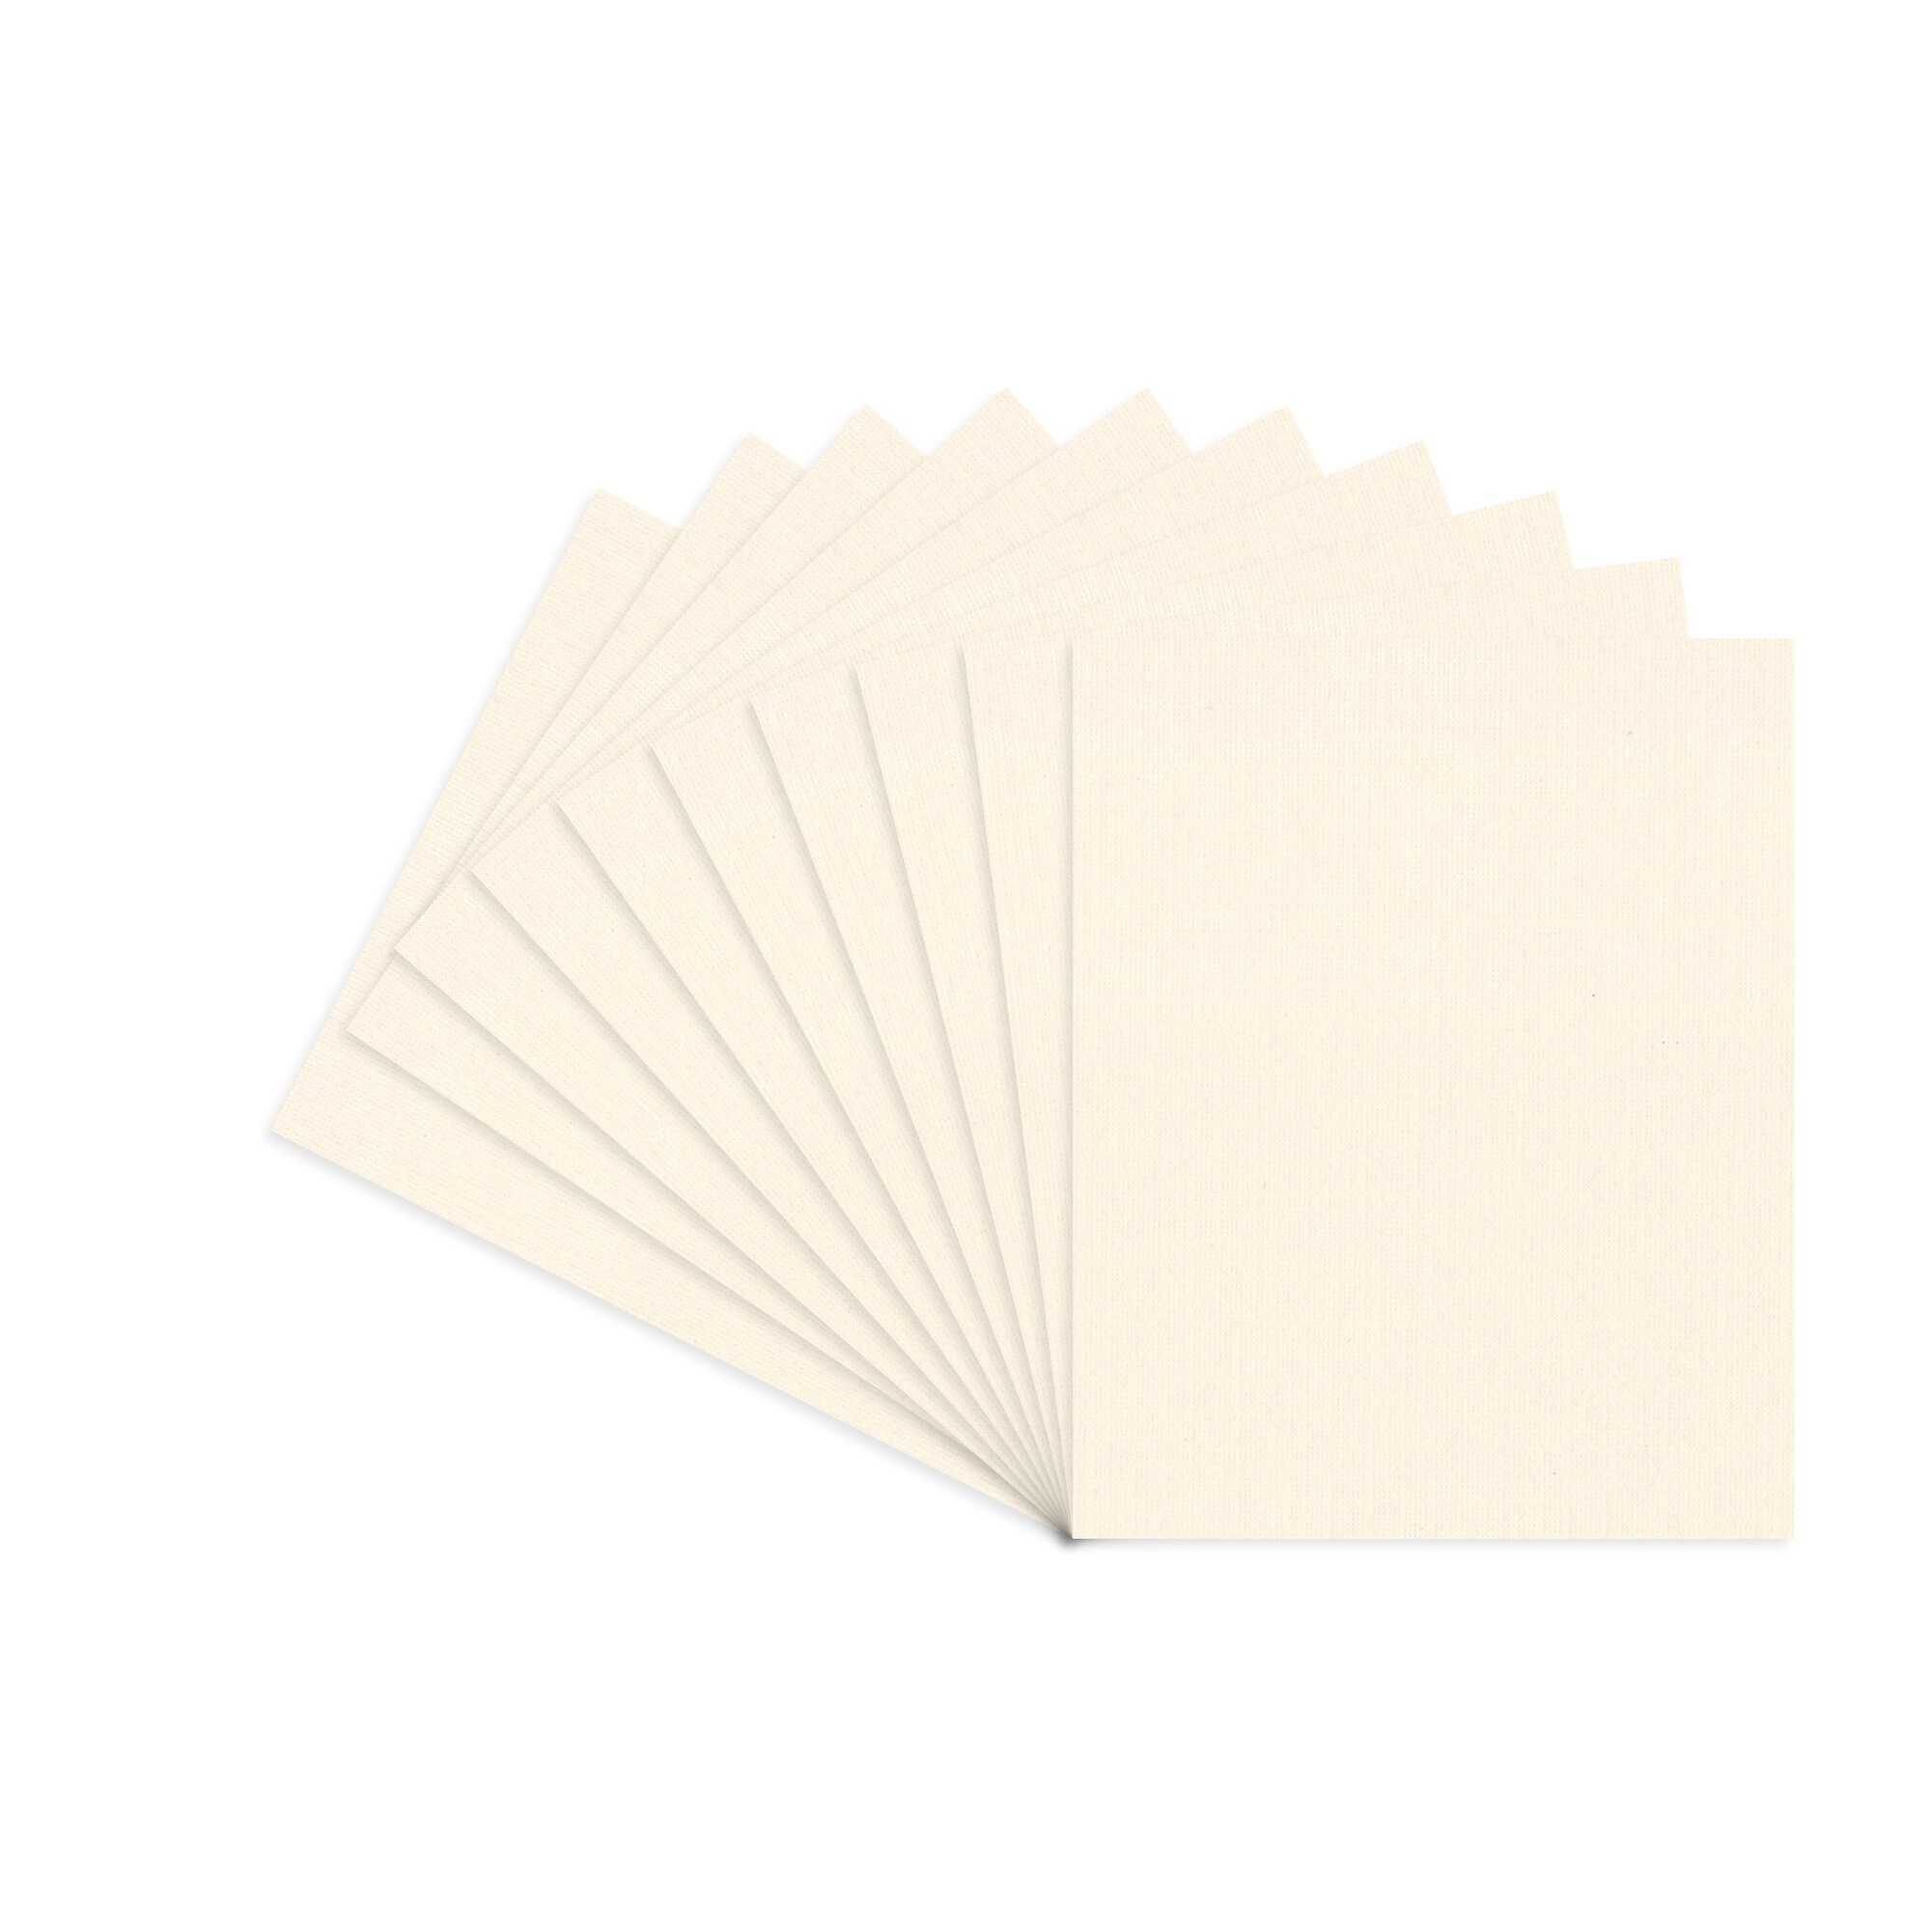 Textured White 8x10 Backing Board - Uncut Photo Mat Board (10-Sheets)